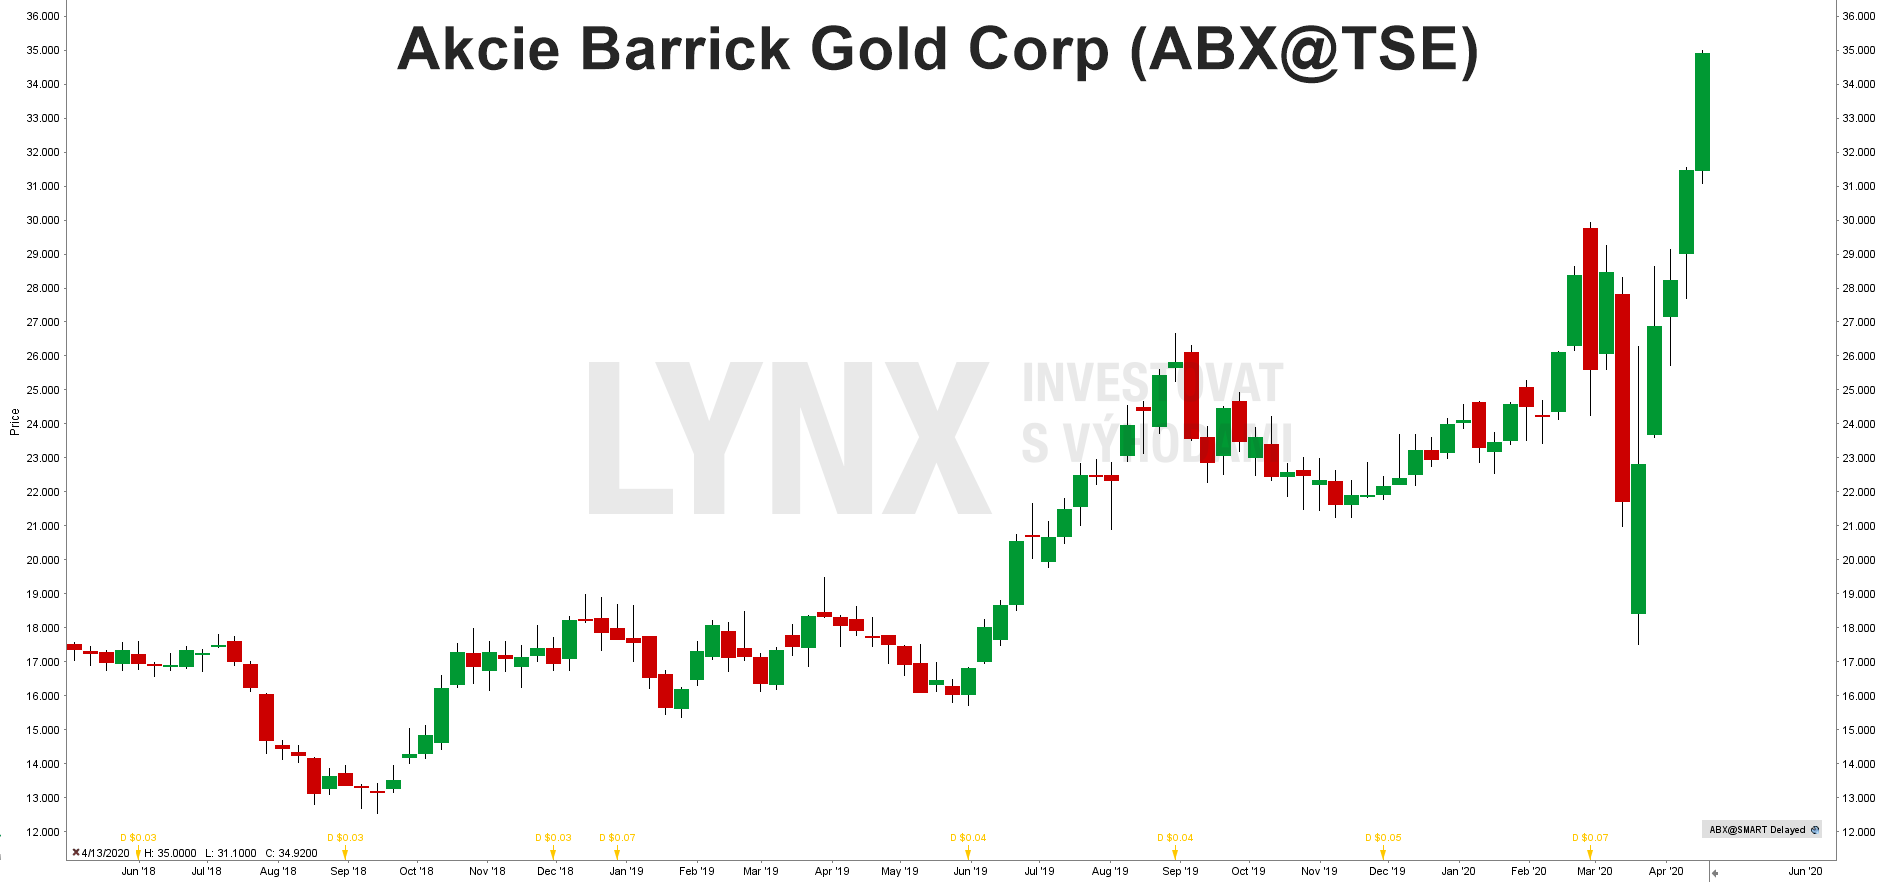 Graf akcie Barrick Gold (ABX)